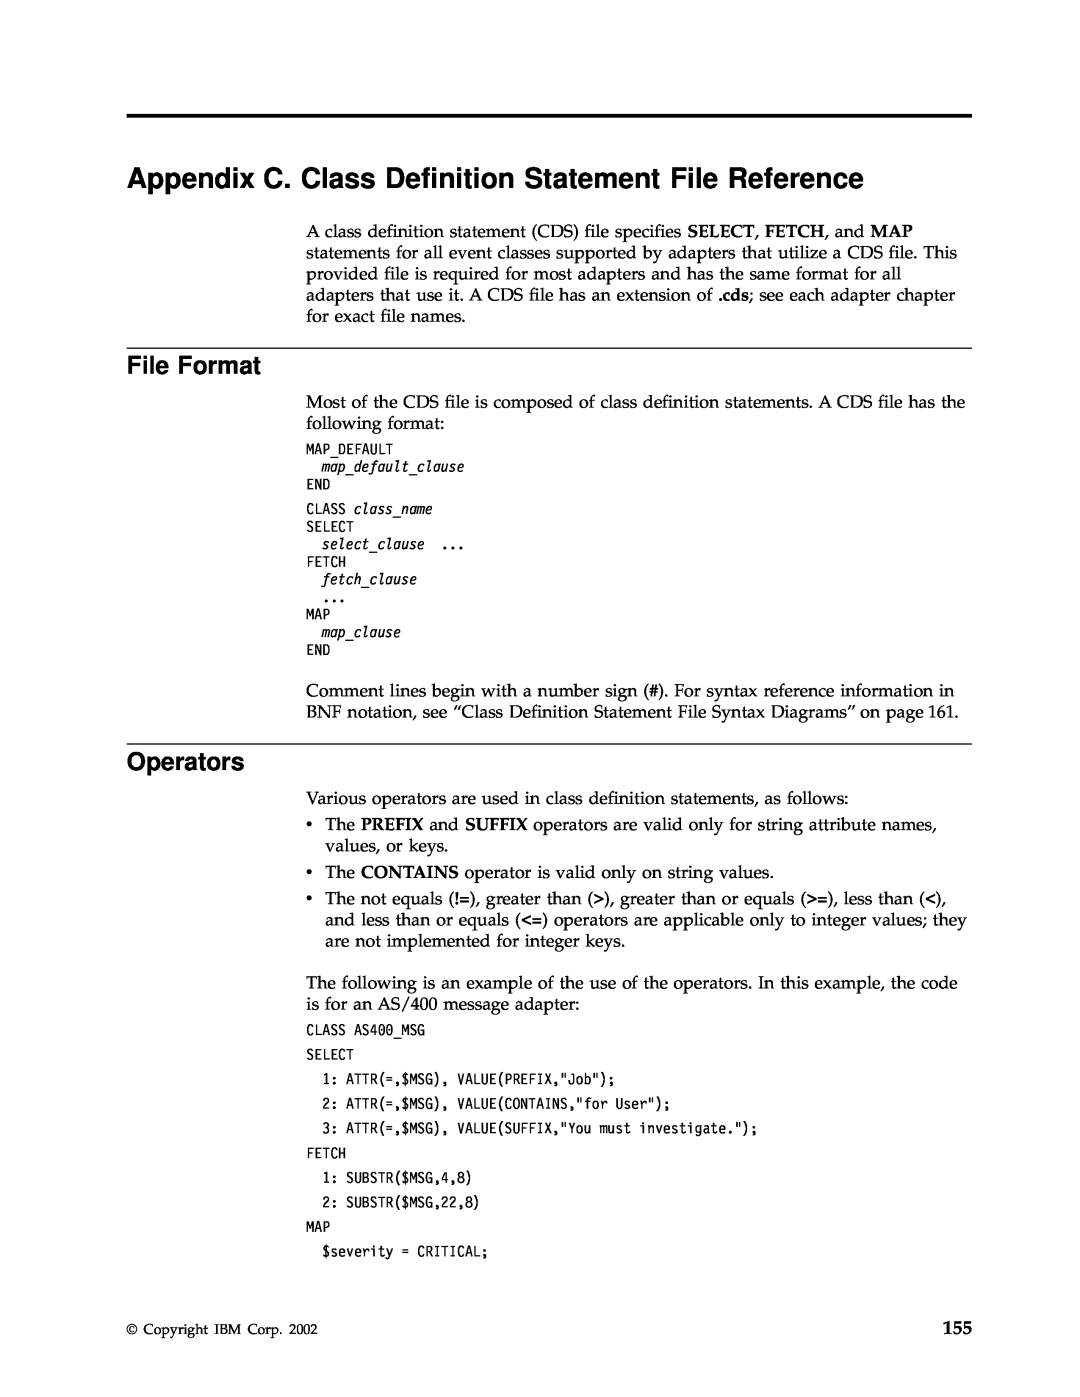 IBM Enterprise Console manual Appendix C. Class Definition Statement File Reference, File Format, Operators 